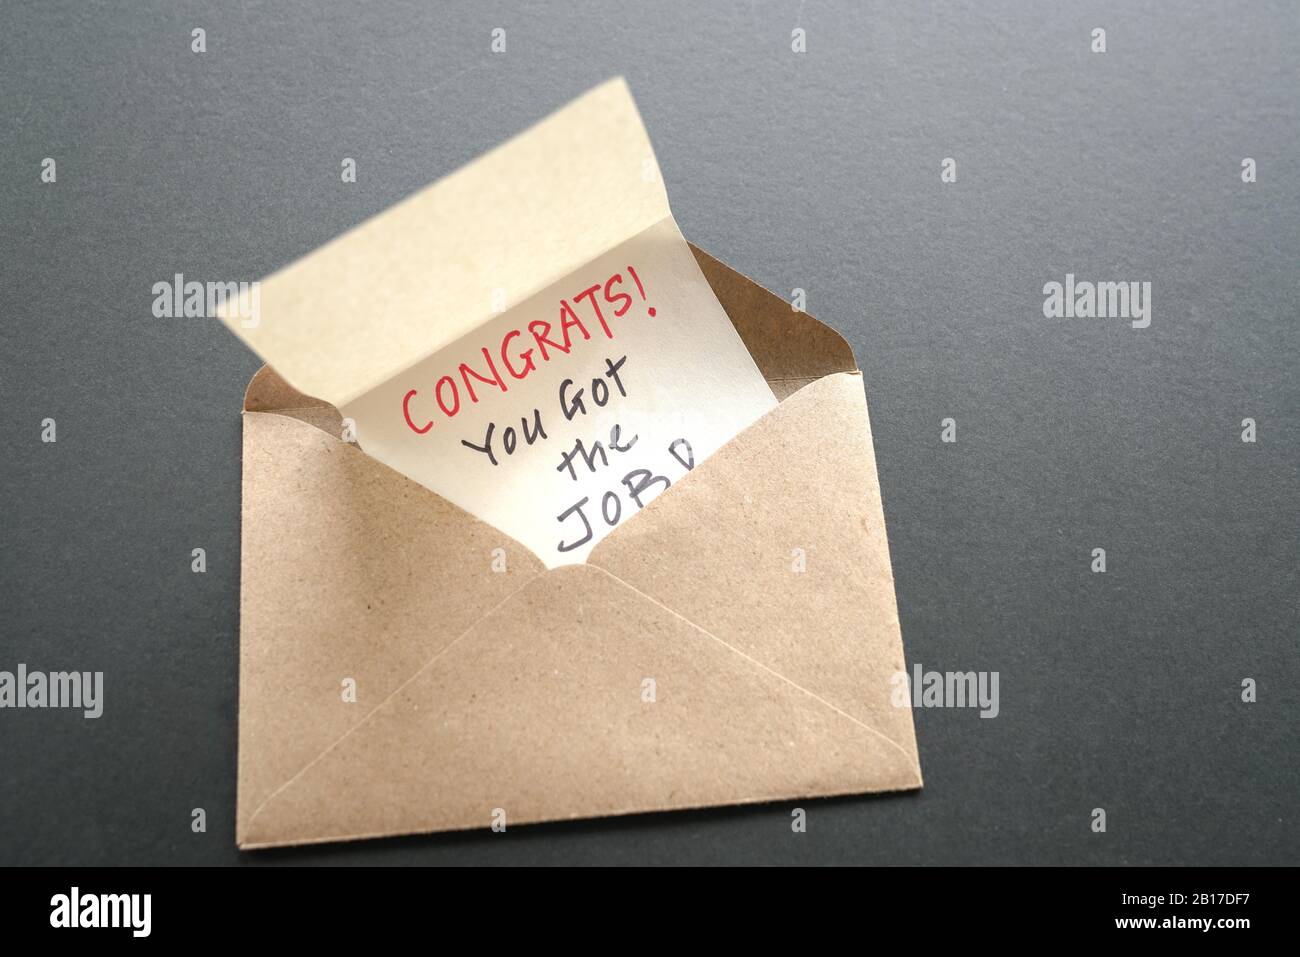 Congrats you got the job, a message inside a brown envelope. New job or employment concept. Stock Photo